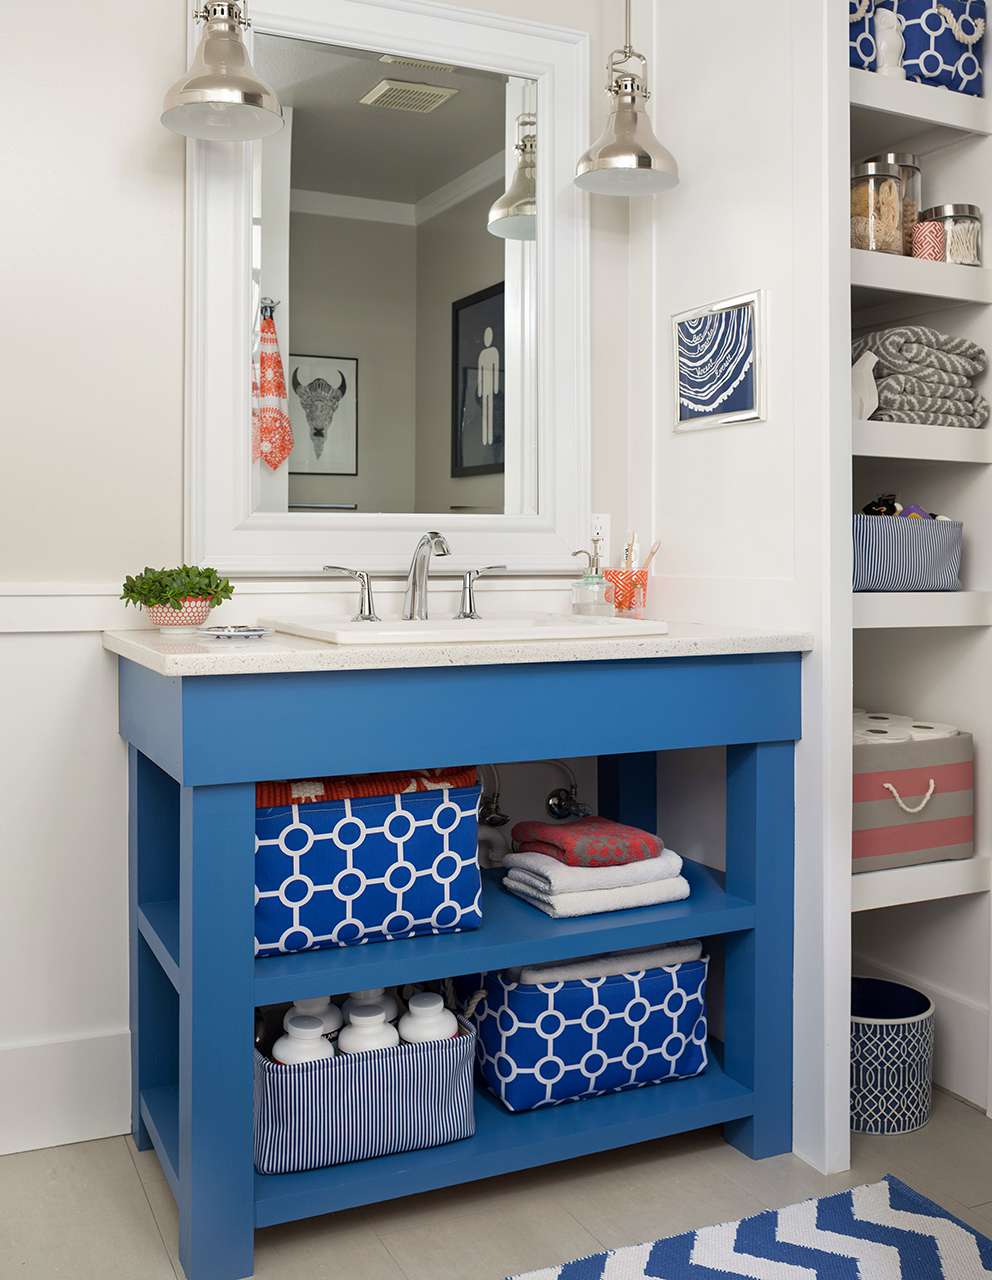 18 Diy Bathroom Vanity Ideas For Custom, Custom Vanity Cabinets For Bathrooms